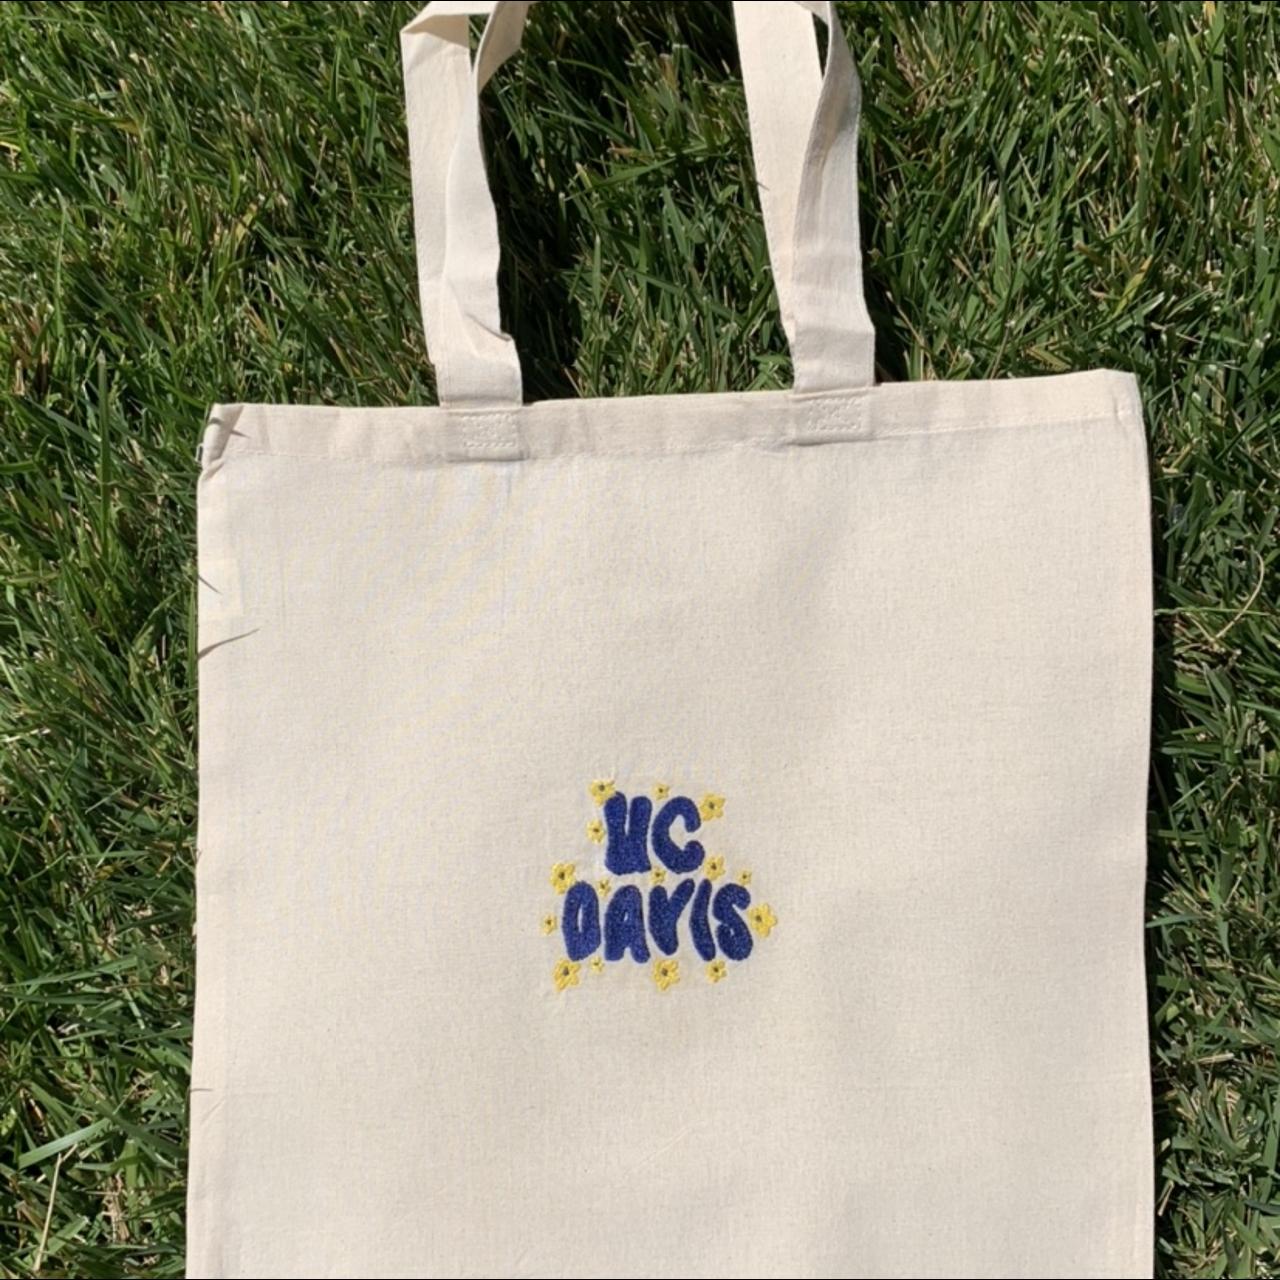 BAG: Bags Across the Globe - UC Davis Arts